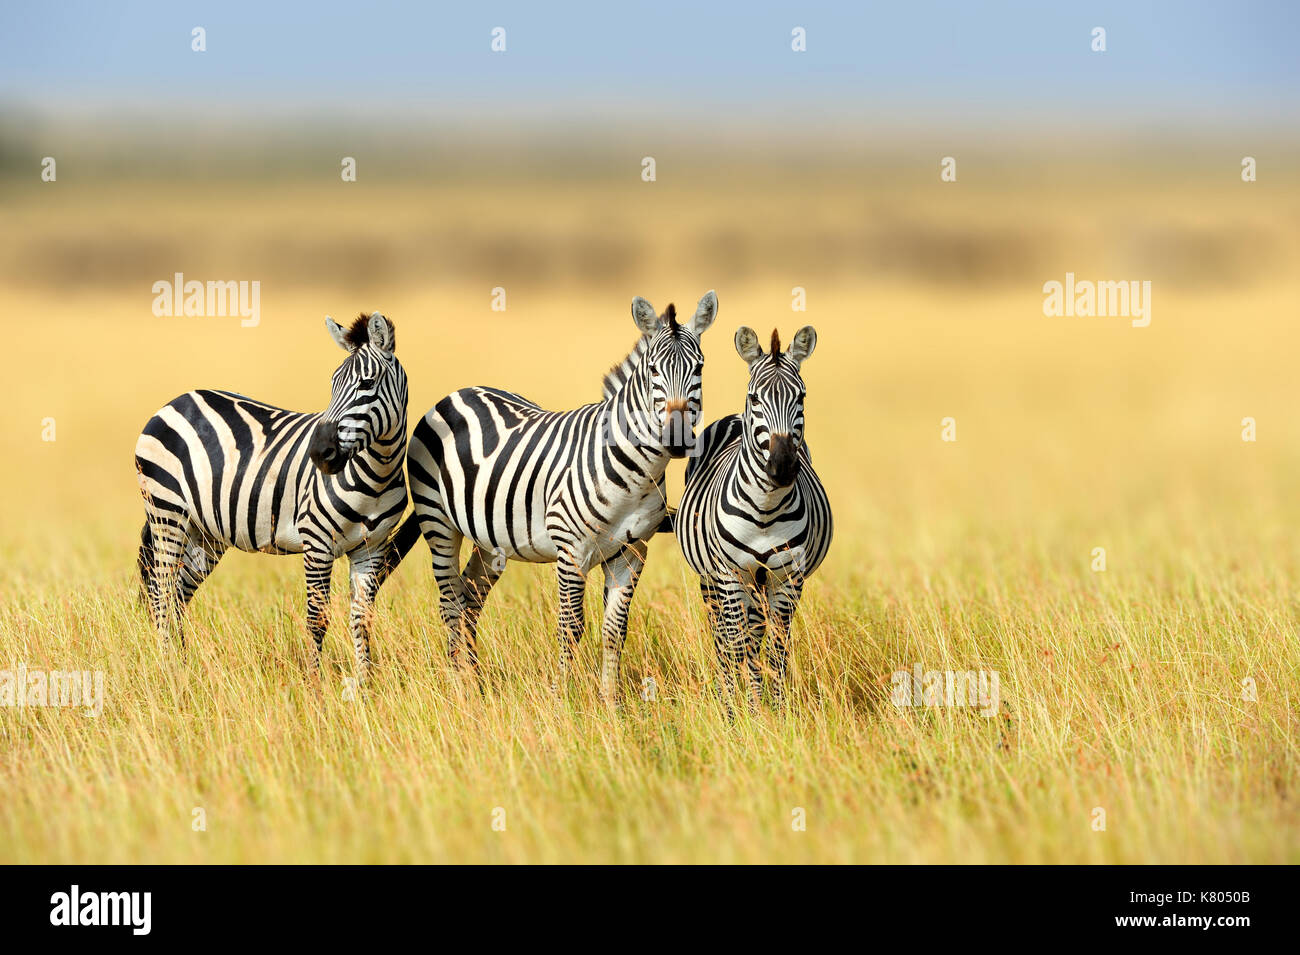 Zebra im gras natur Lebensraum, Nationalpark von Kenia. Wildlife Szene aus Natur, Afrika Stockfoto